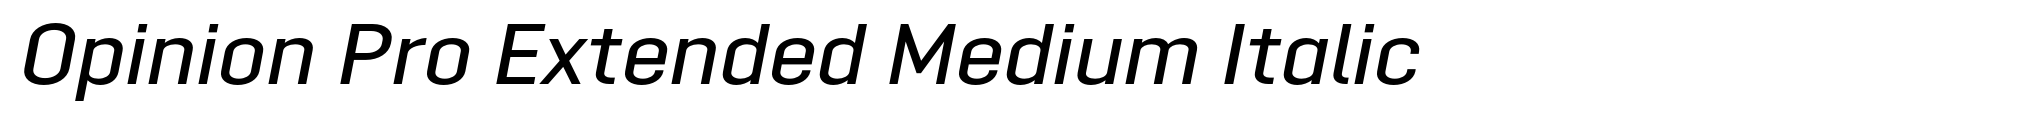 Opinion Pro Extended Medium Italic image